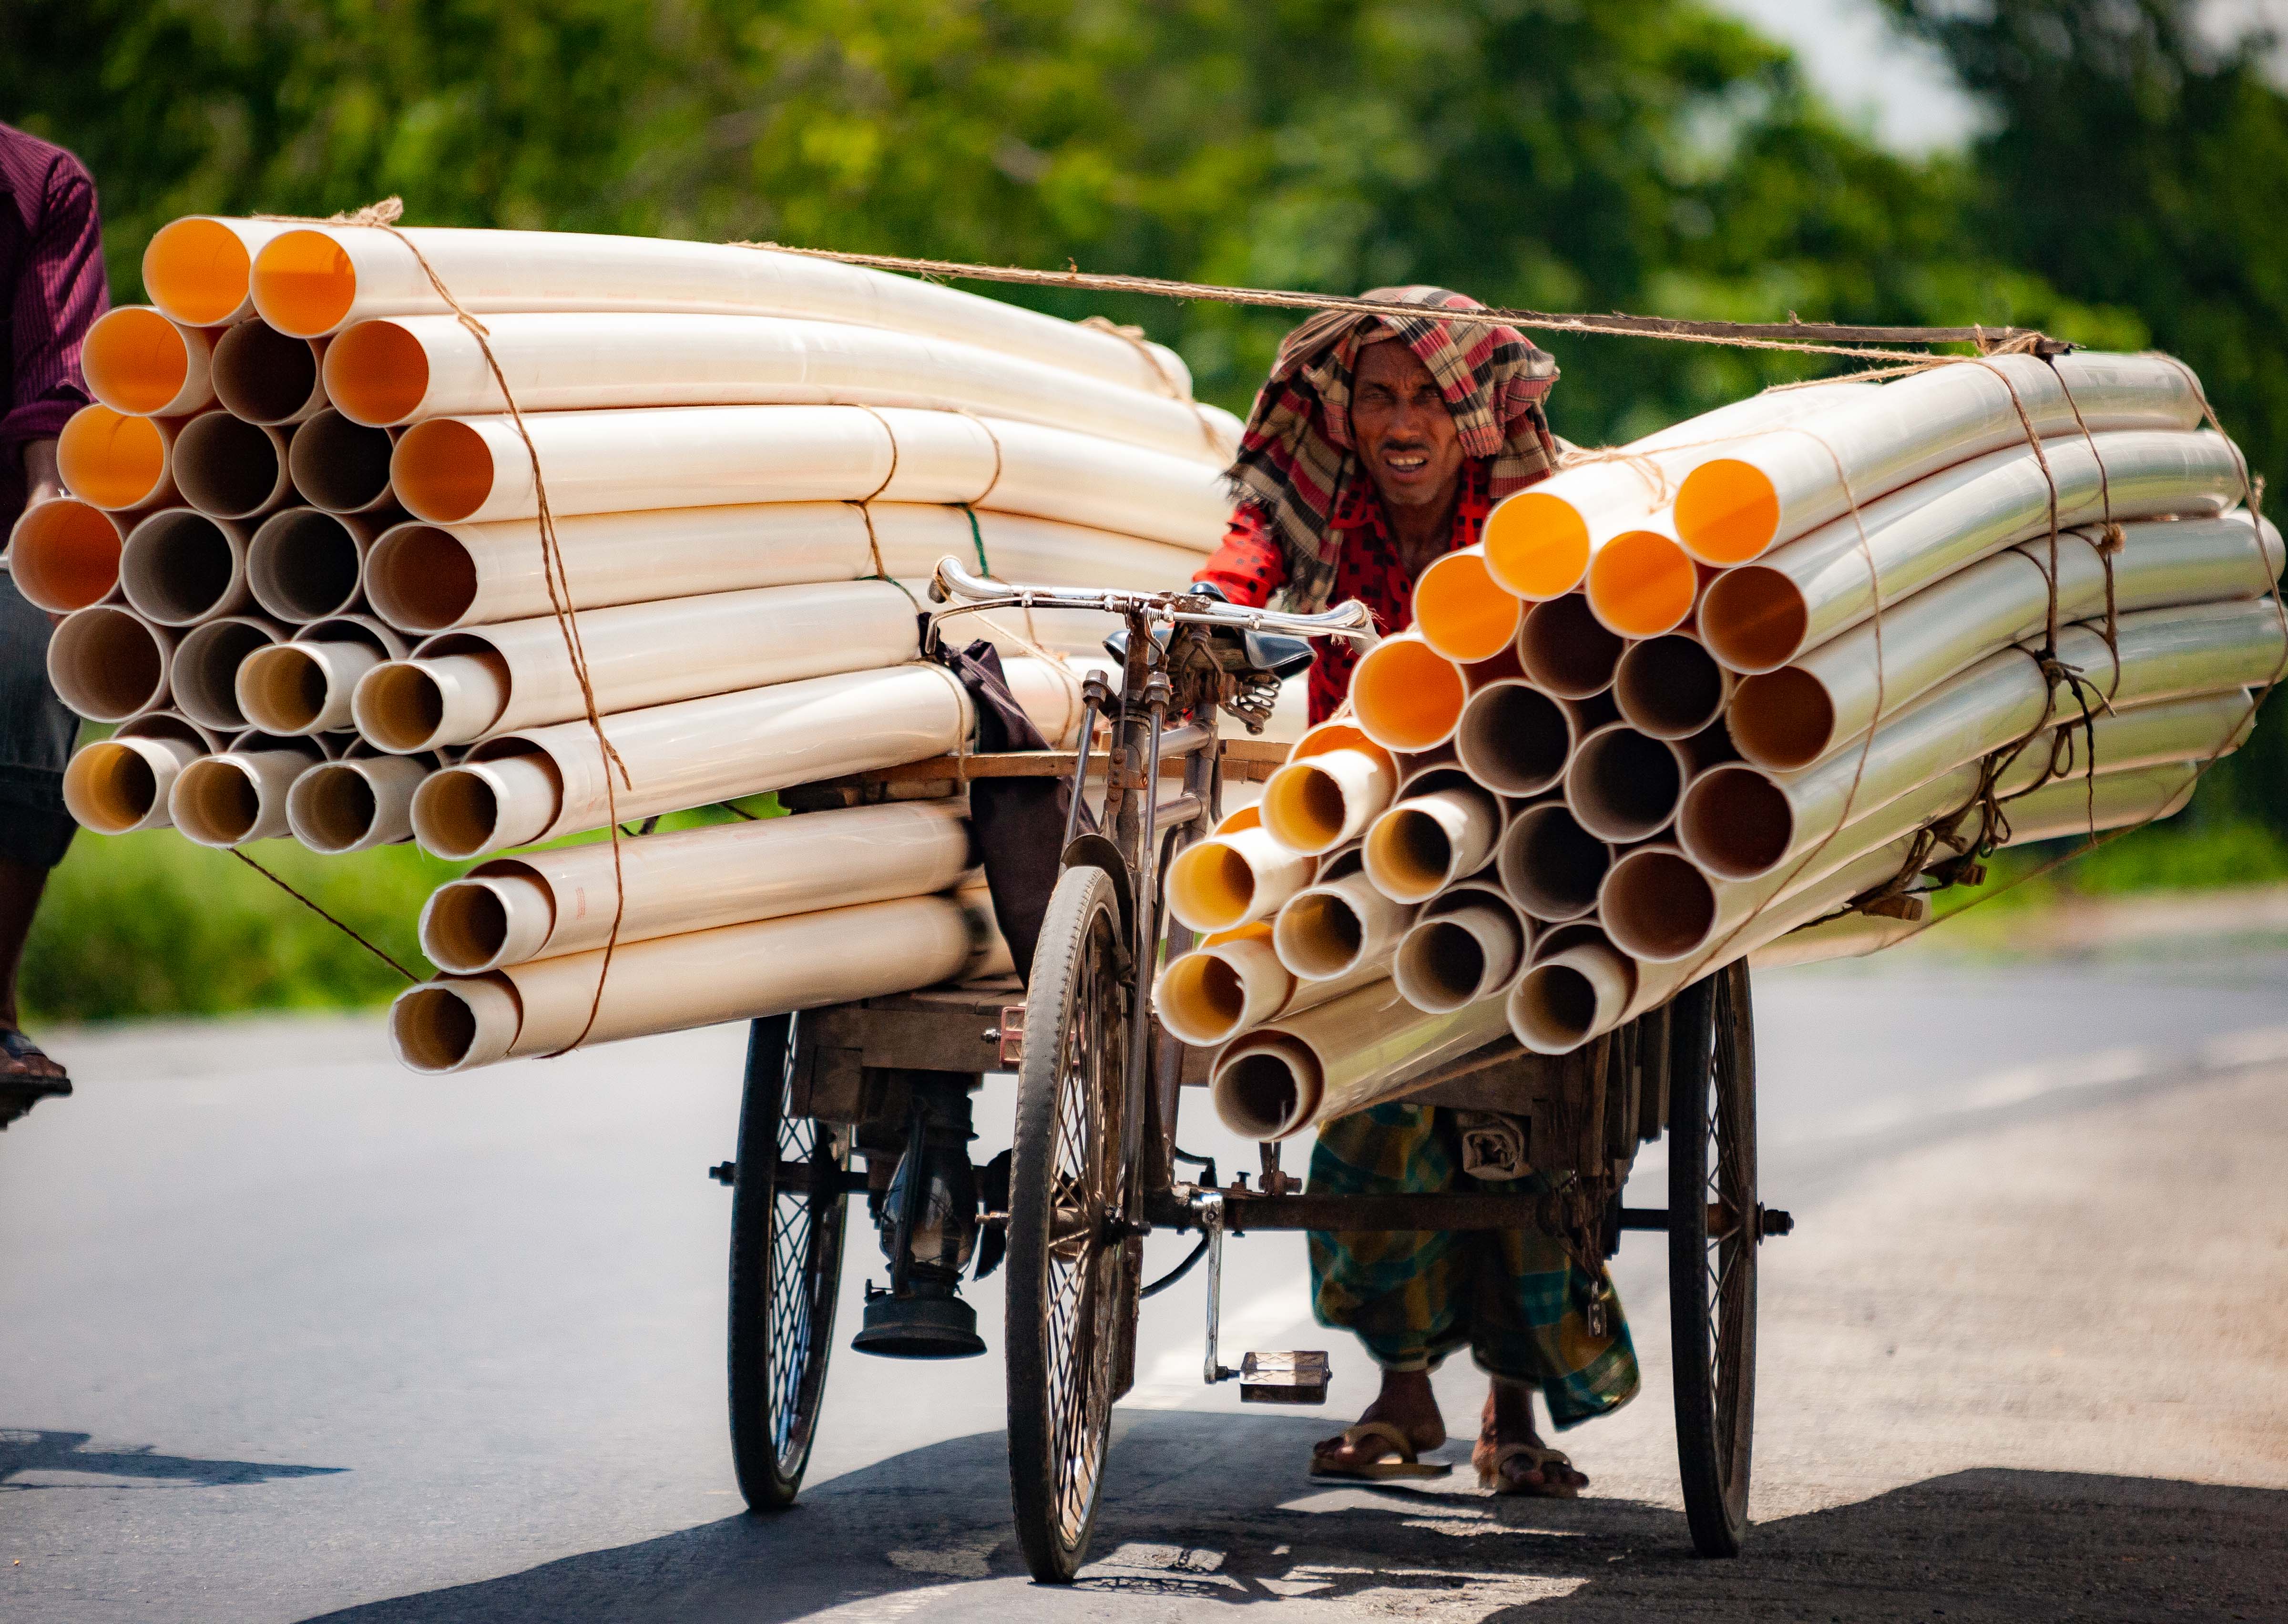 Bangladesh, Bogra Prov, Hauling Pipes, 2009, IMG 9099